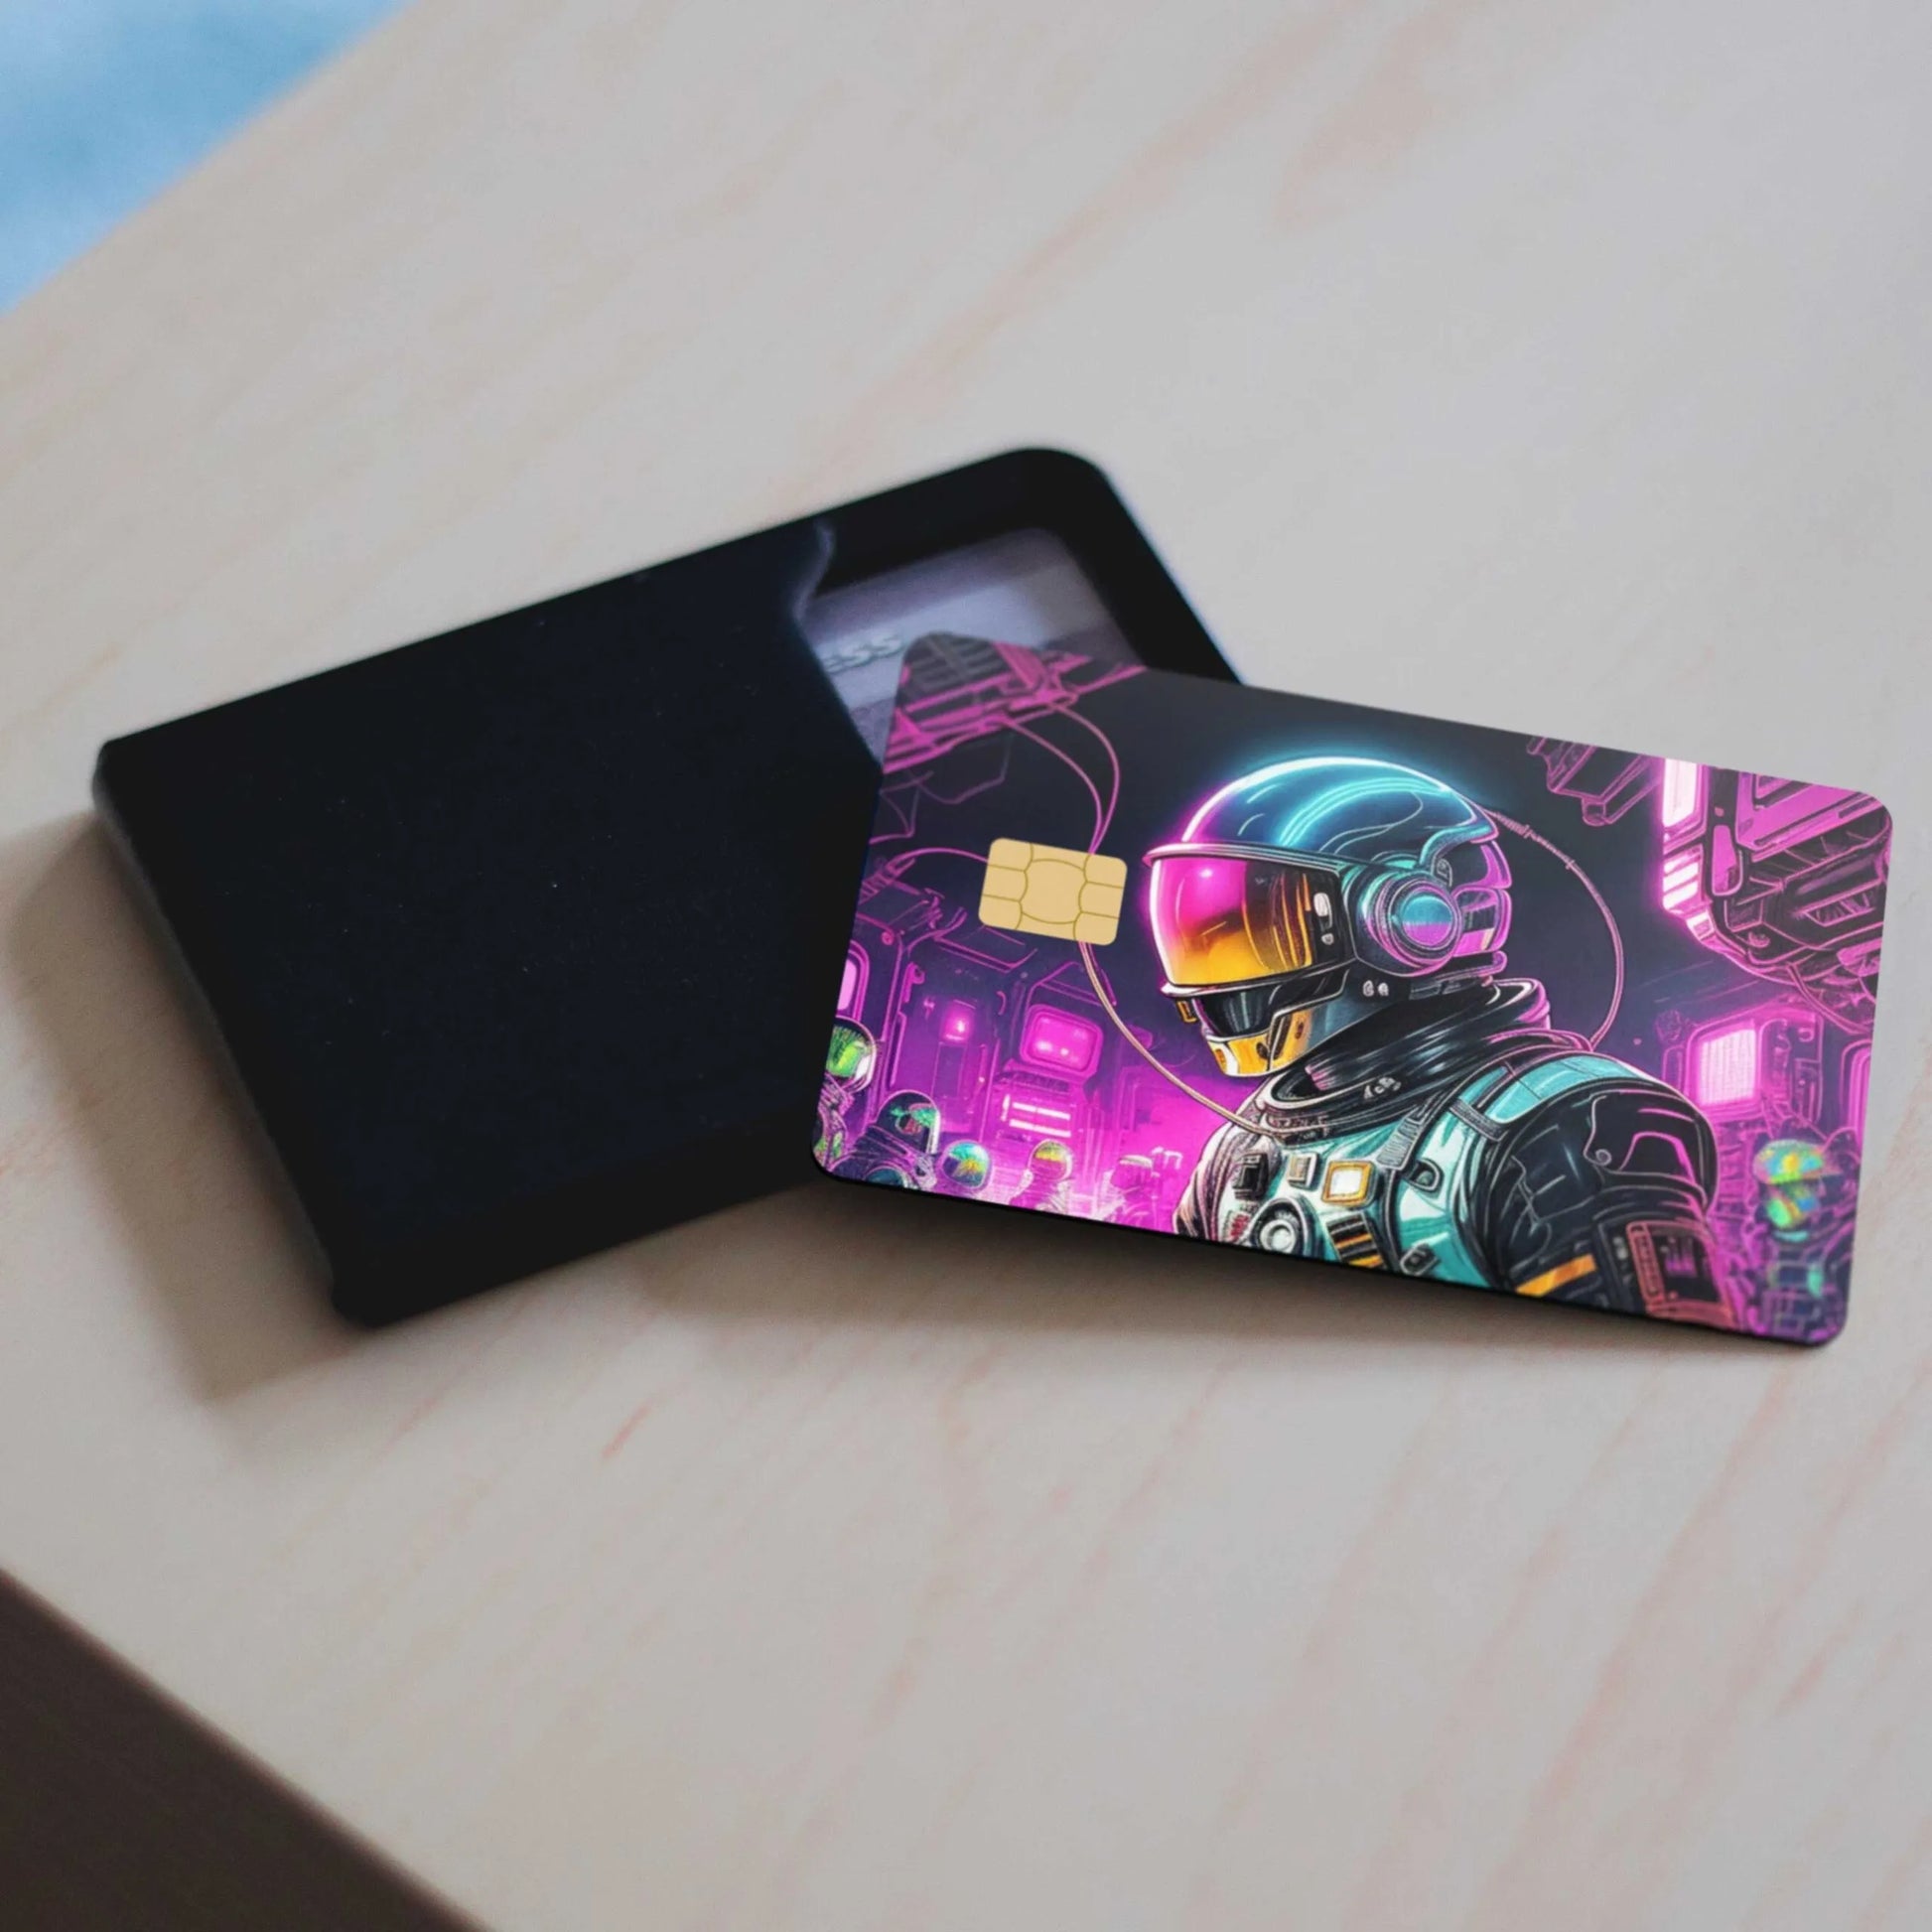 Cyberpunk Astronaut credit card skins